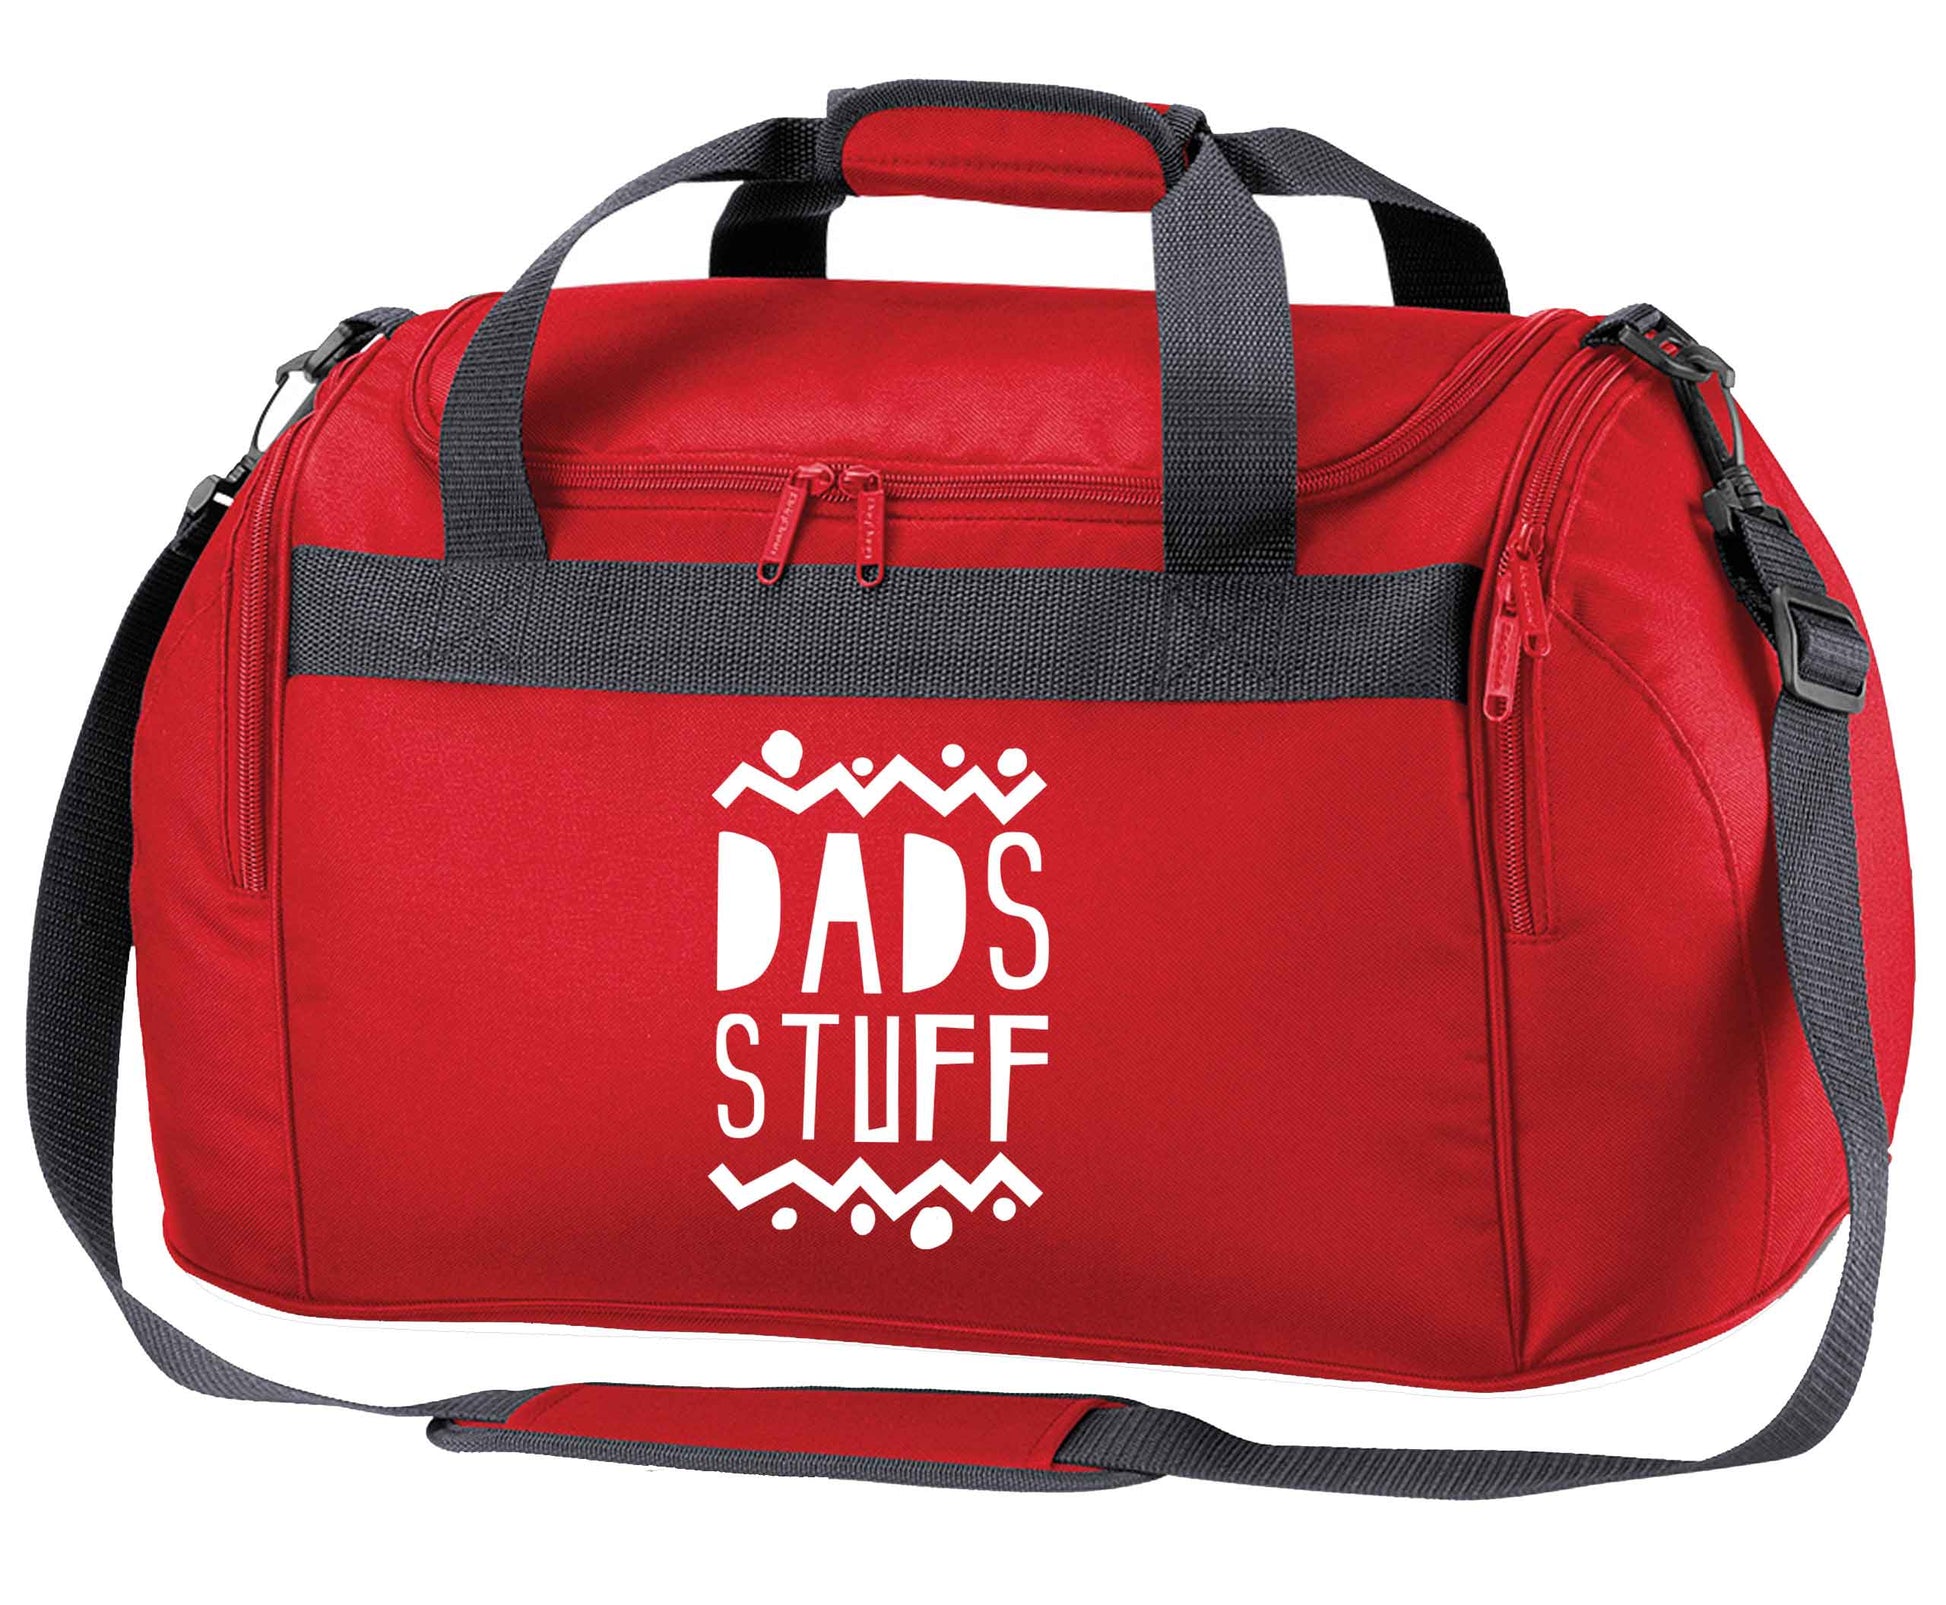 Dads stuff red holdall / duffel bag